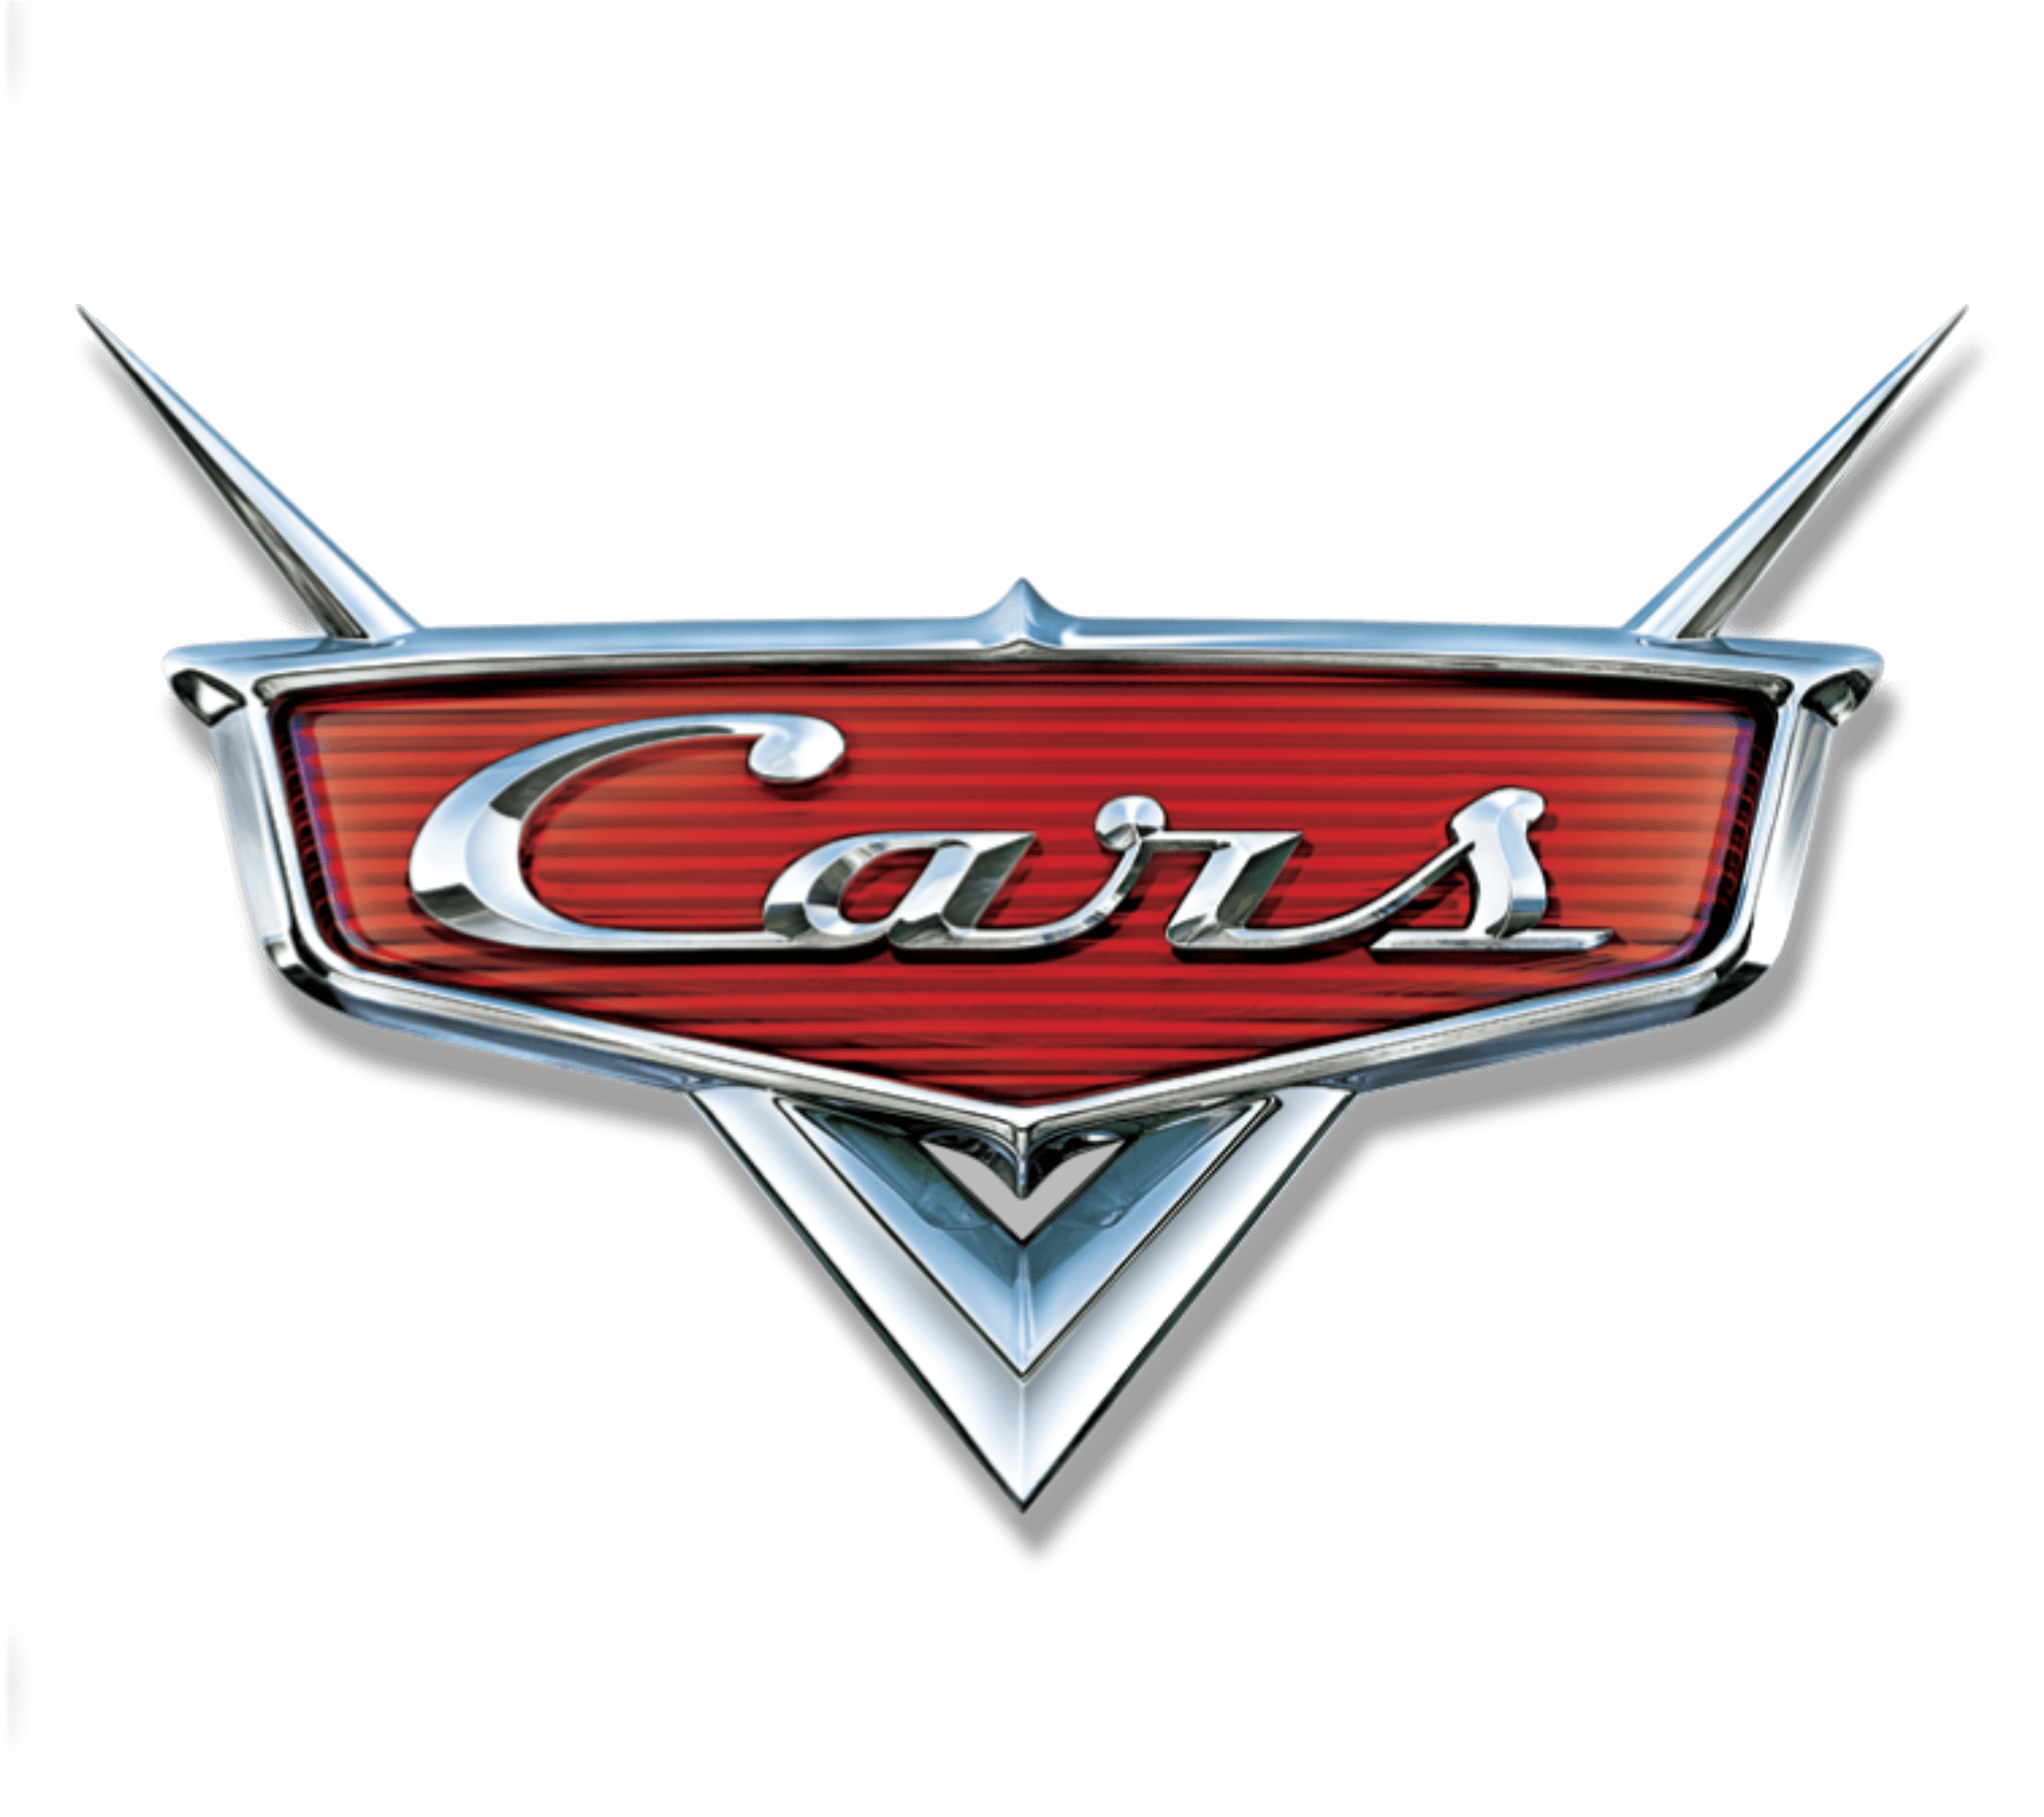 Pixar Cars Logo - Disney and Pixar Cars Logo PNG Transparent & SVG Vector - Freebie Supply